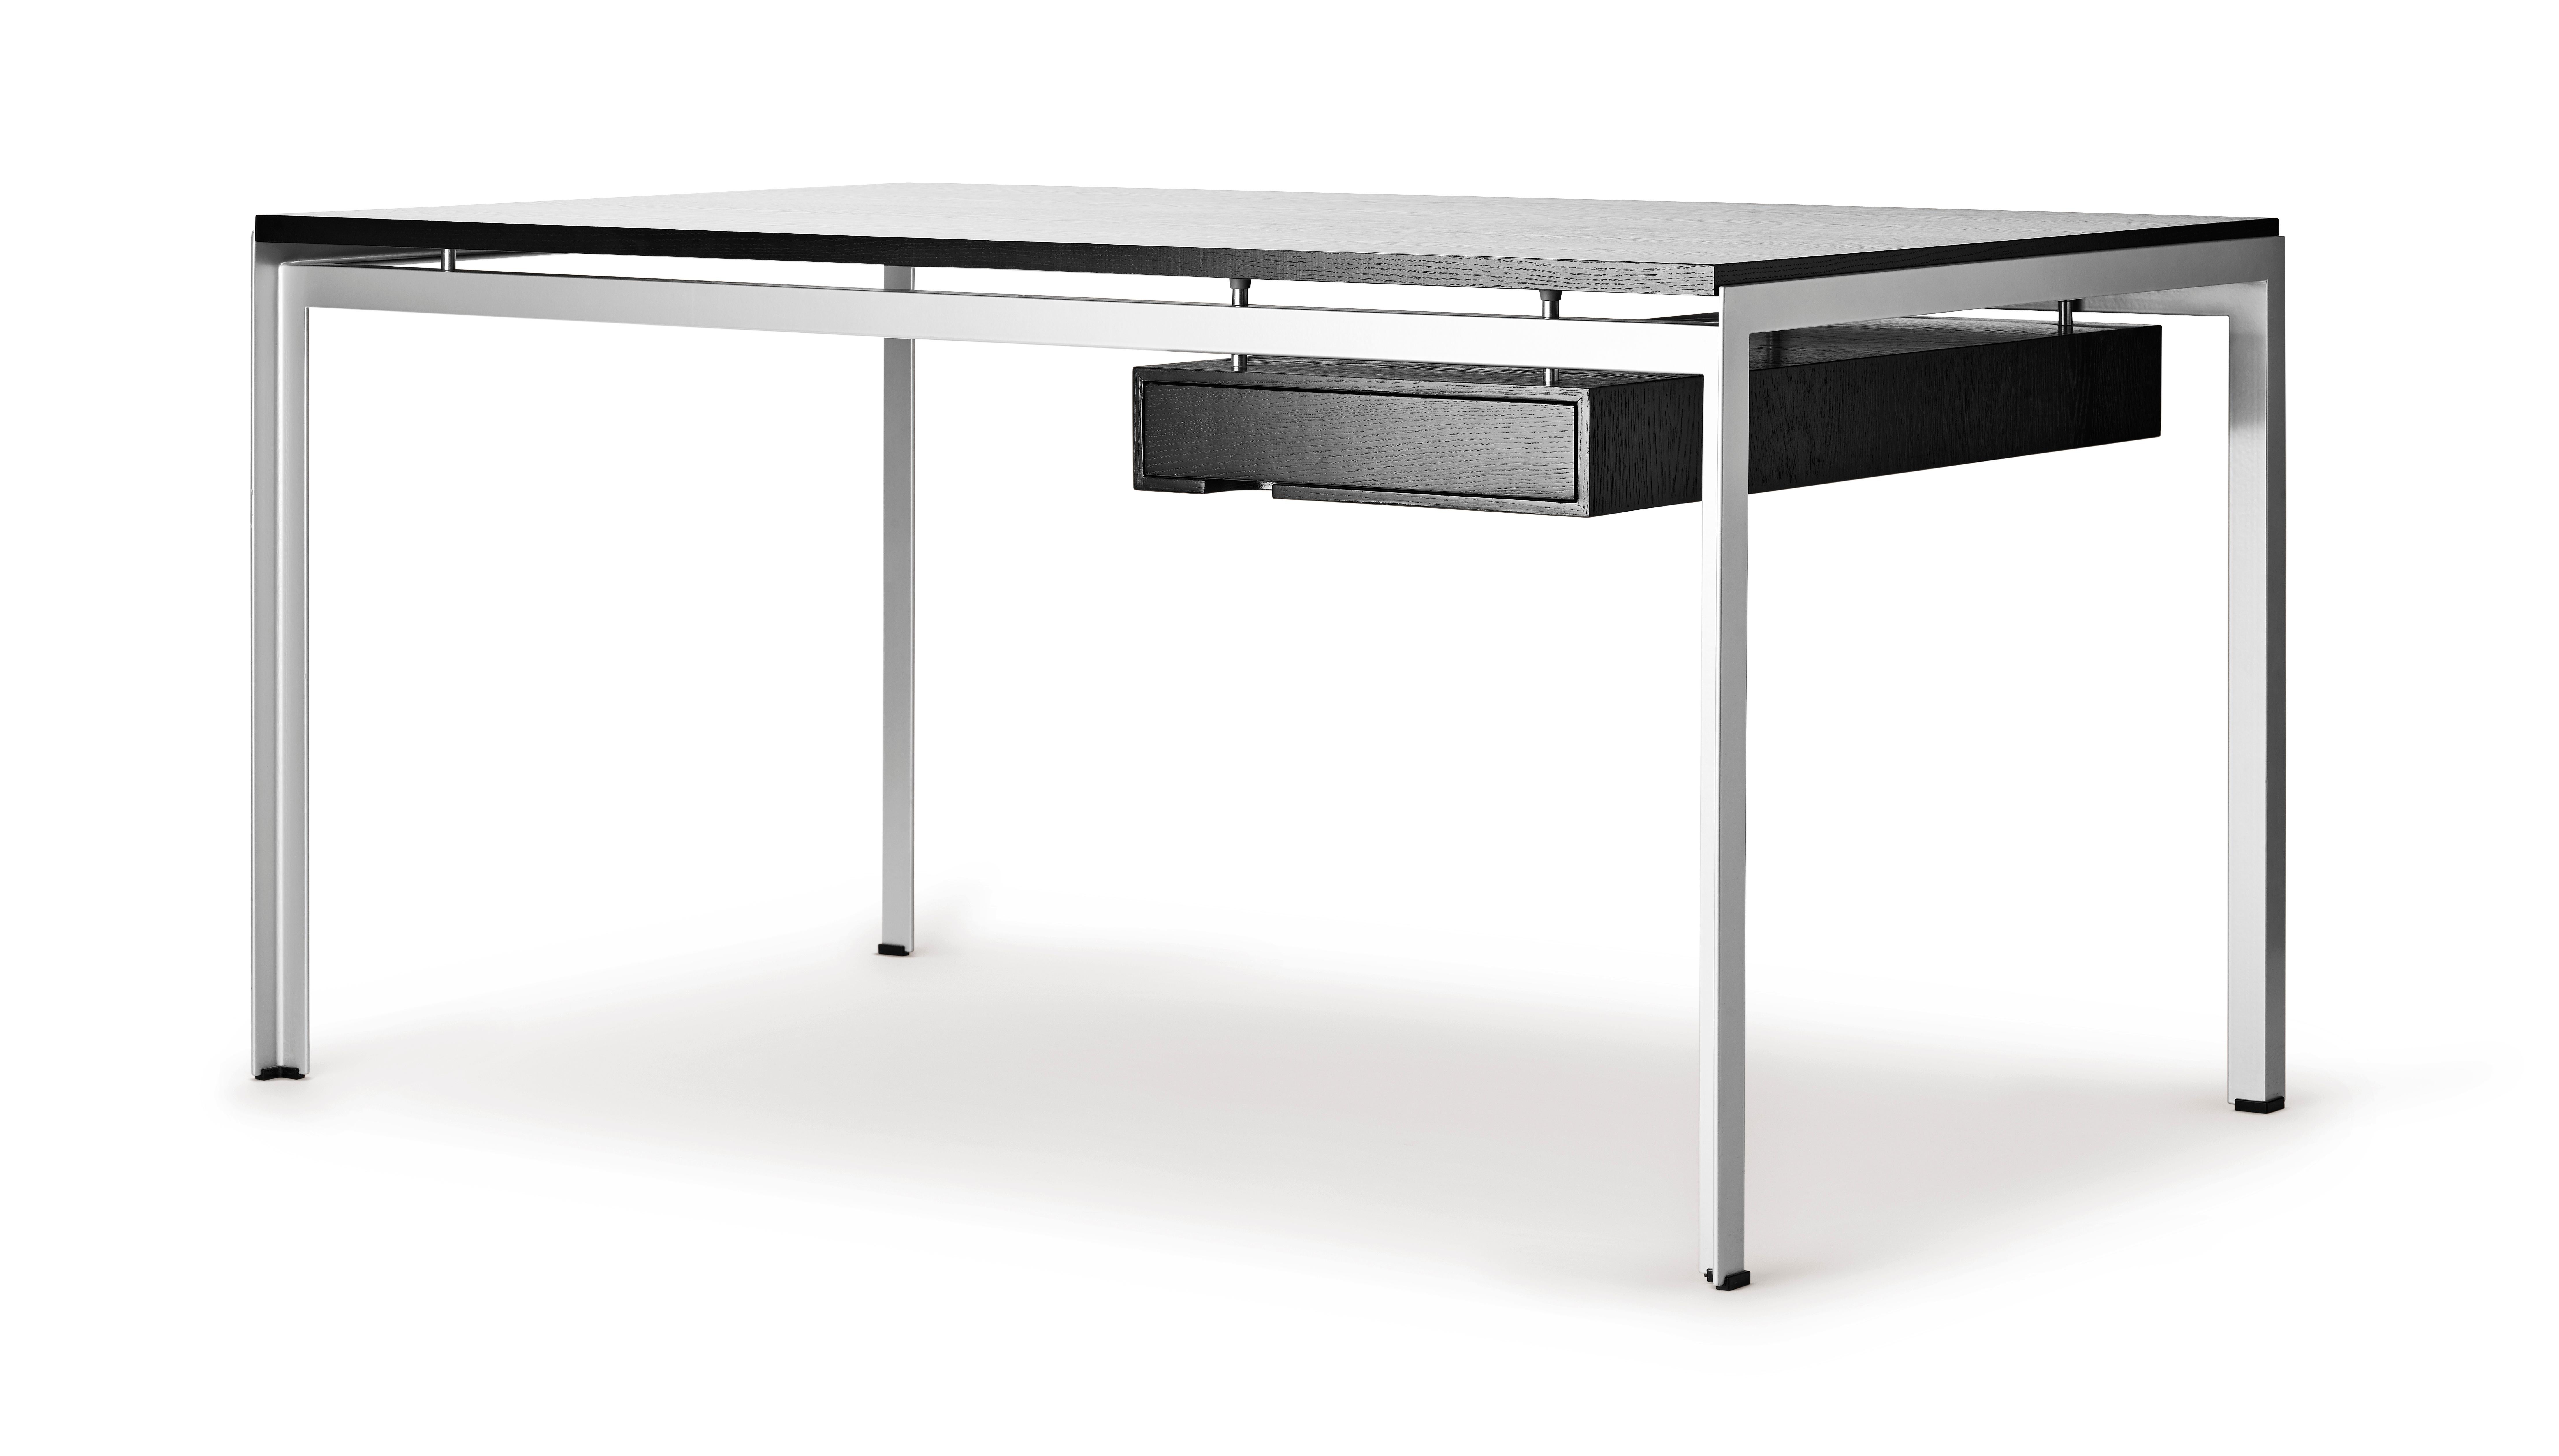 Black (Oak Painted blacks9000-N) PK52A Student Desk in Wood Finishes with Gray Steel Base by Poul Kjærholm 2